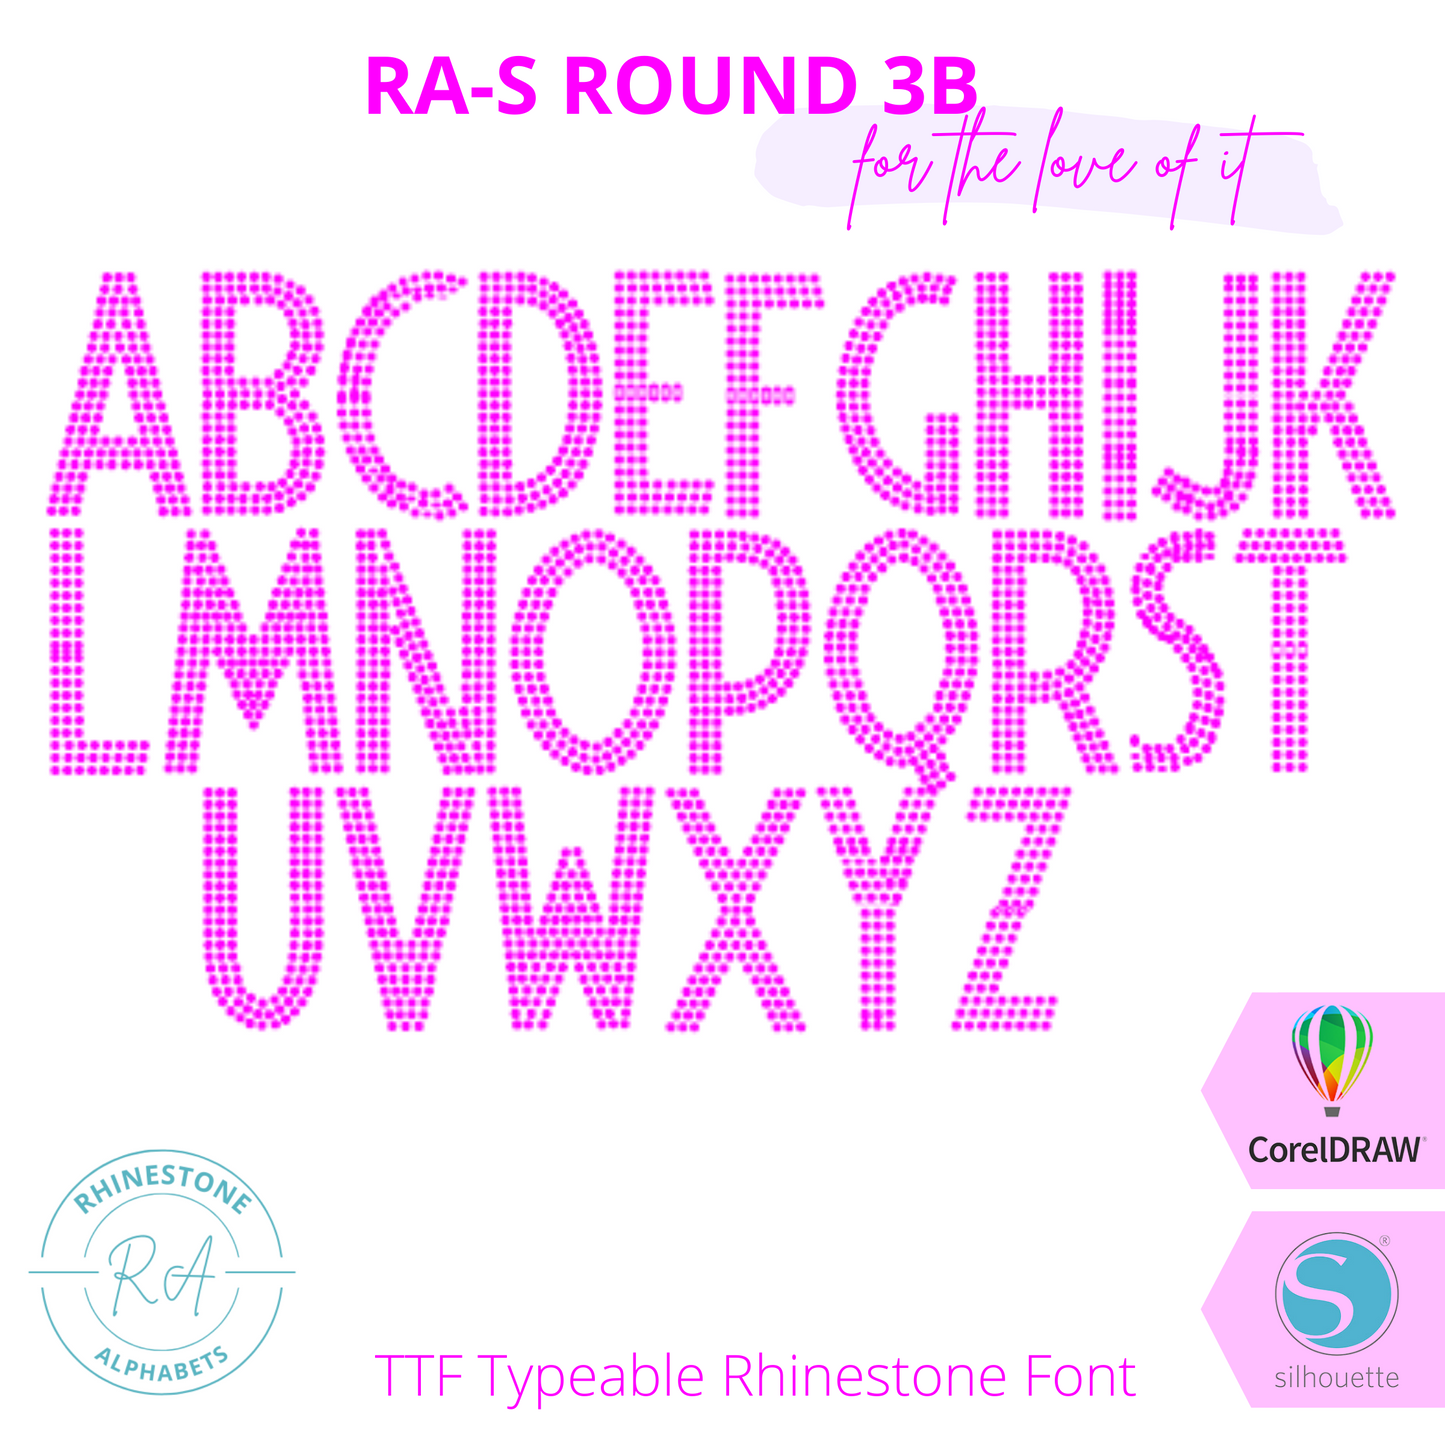 RA-S Round 3B - RhinestoneAlphabets